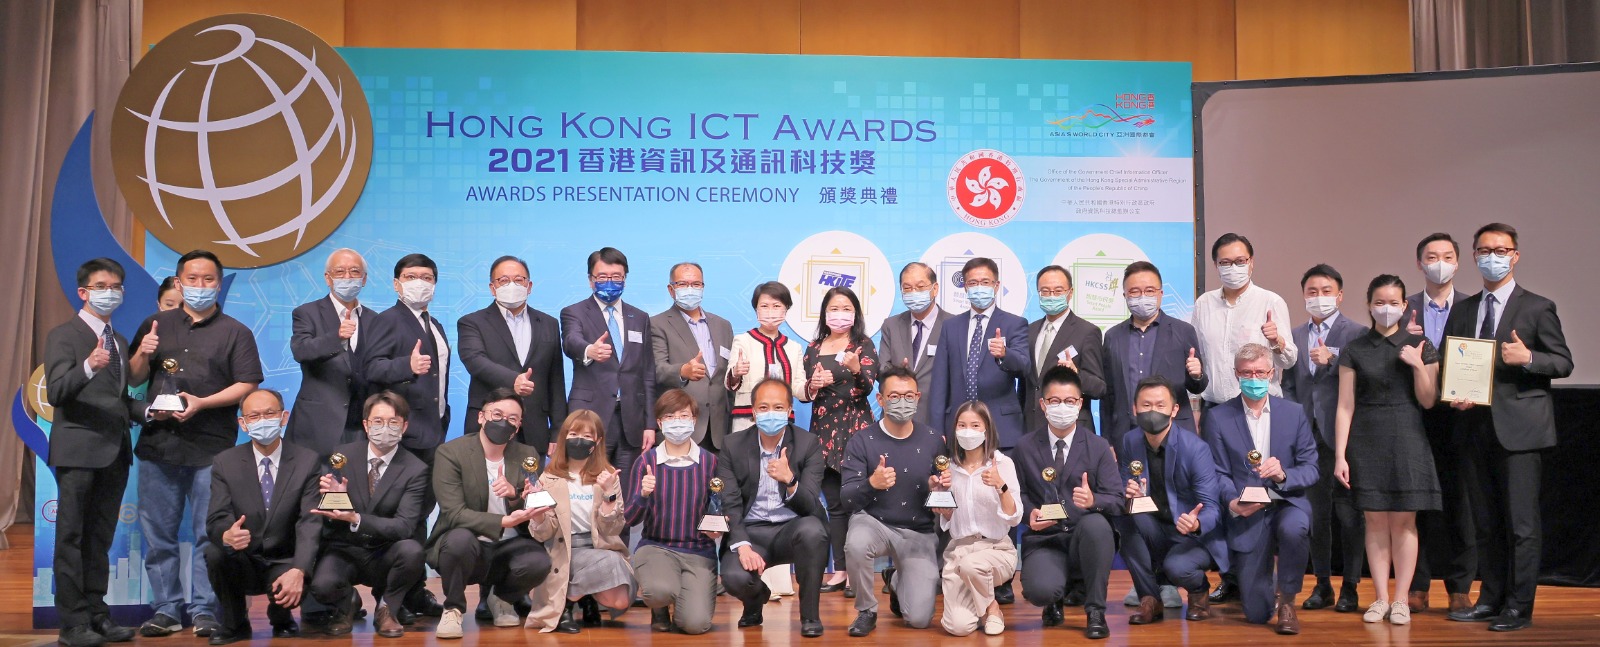 Hong Kong ICT Awards 2021 – Smart Mobility Award Winners